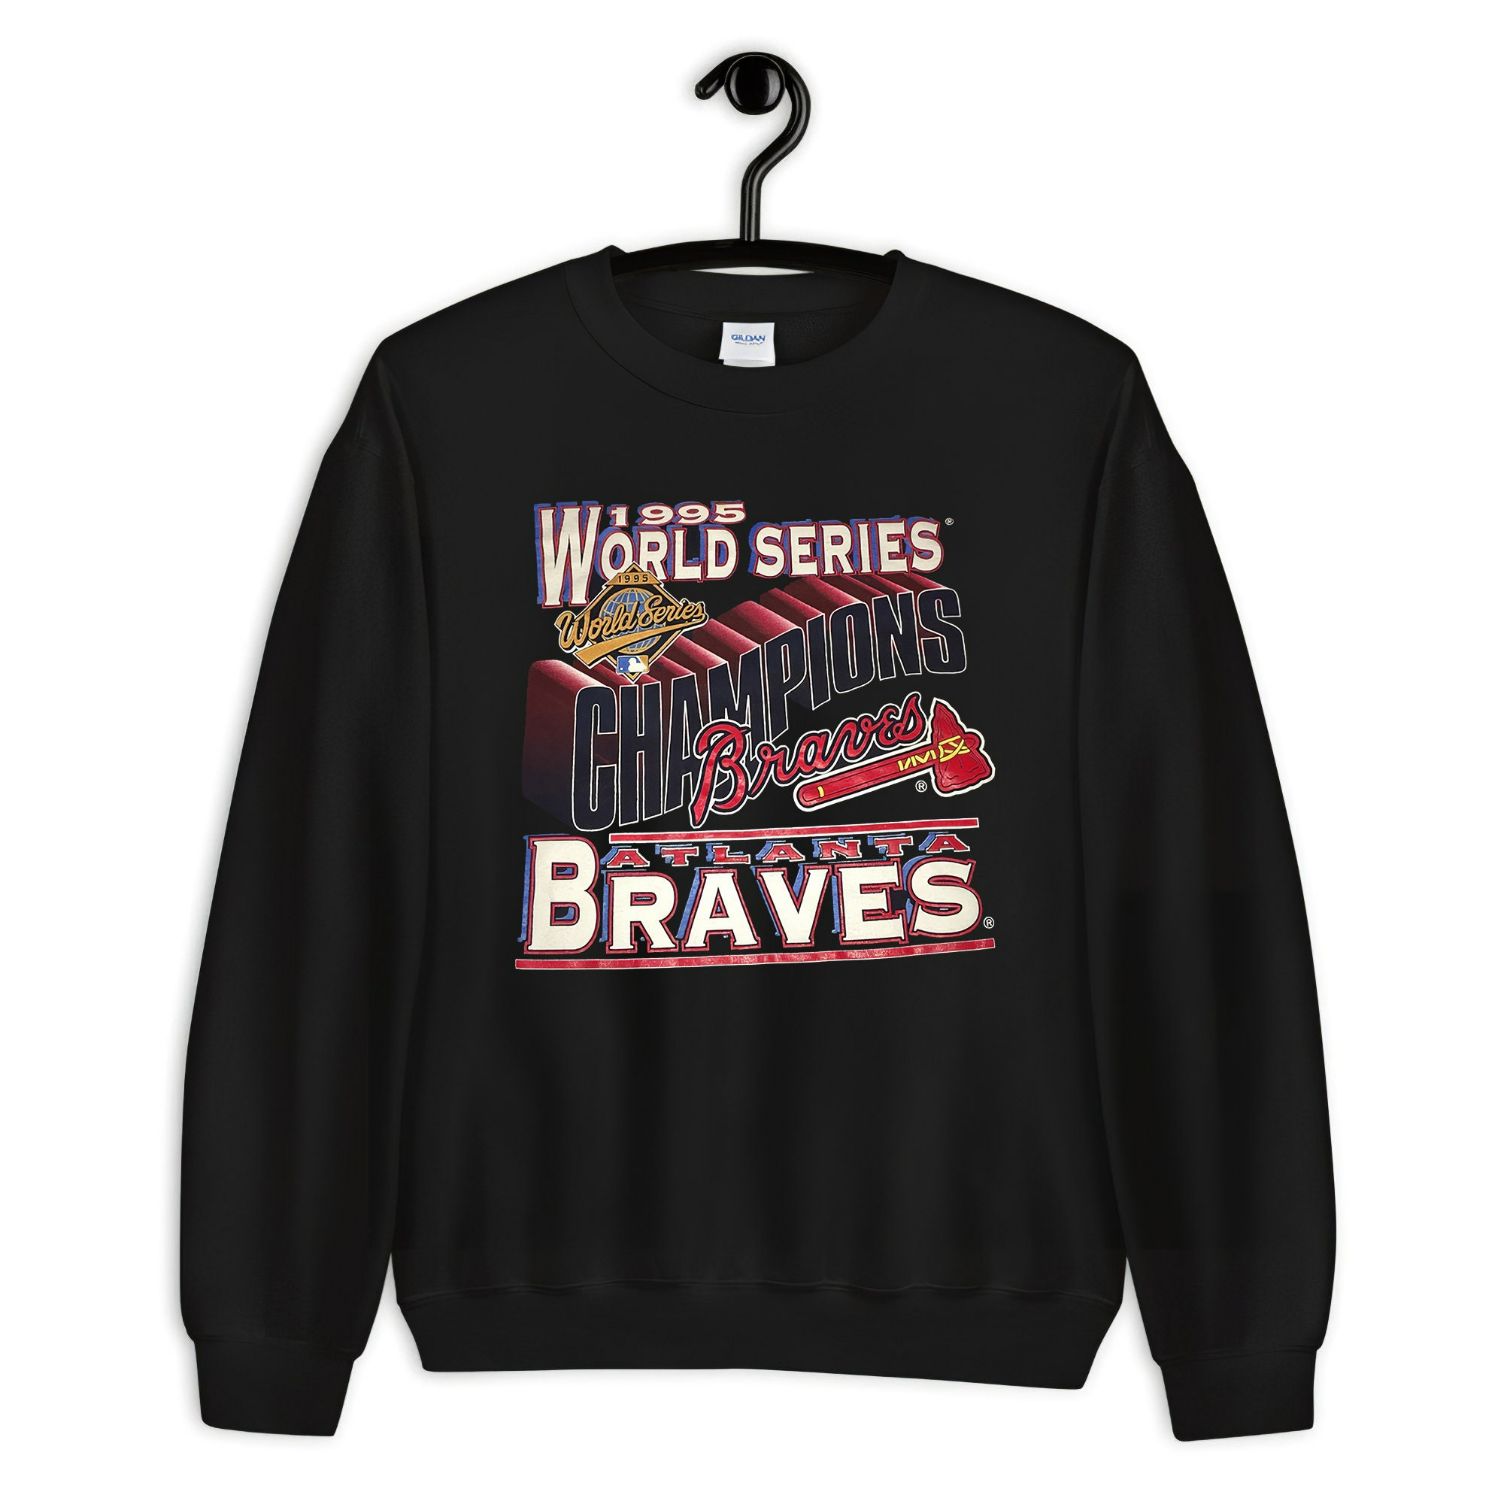 Braves Sweatshirt